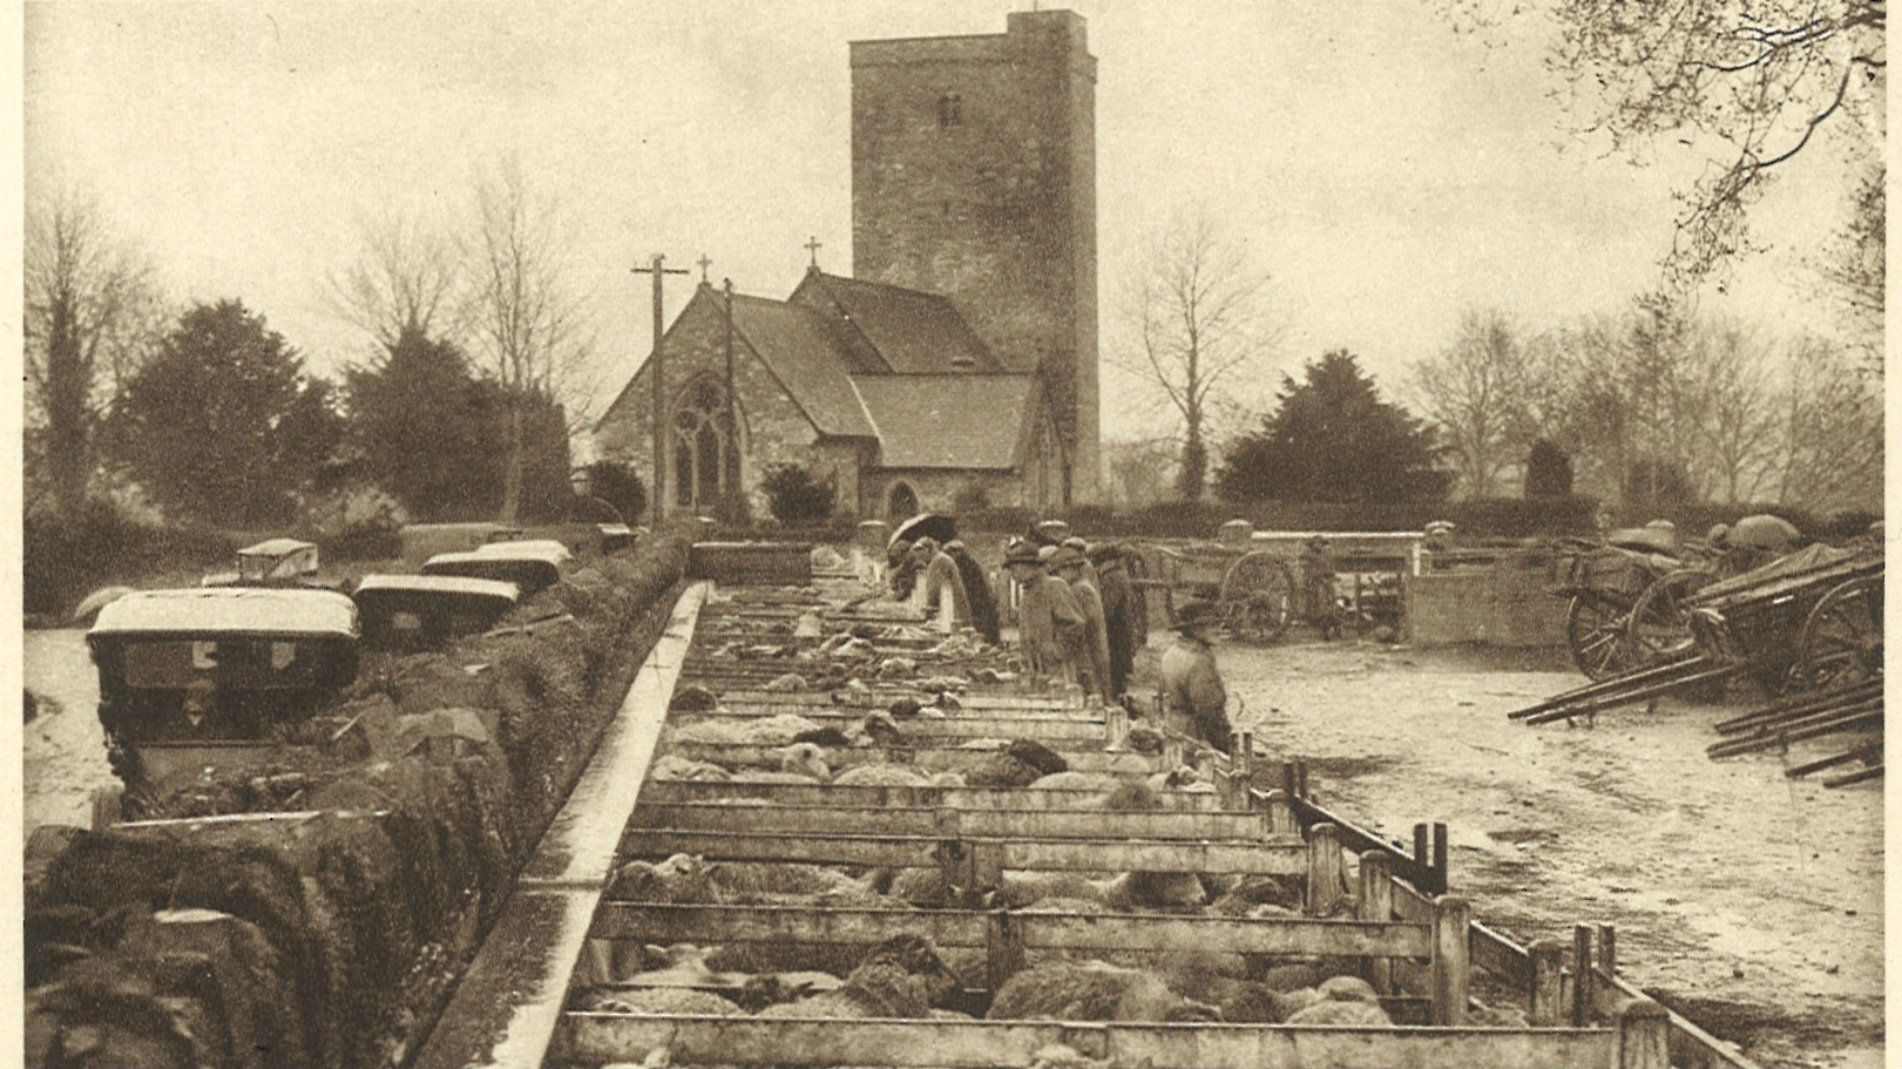 Market day in Llanybydder, early 1900